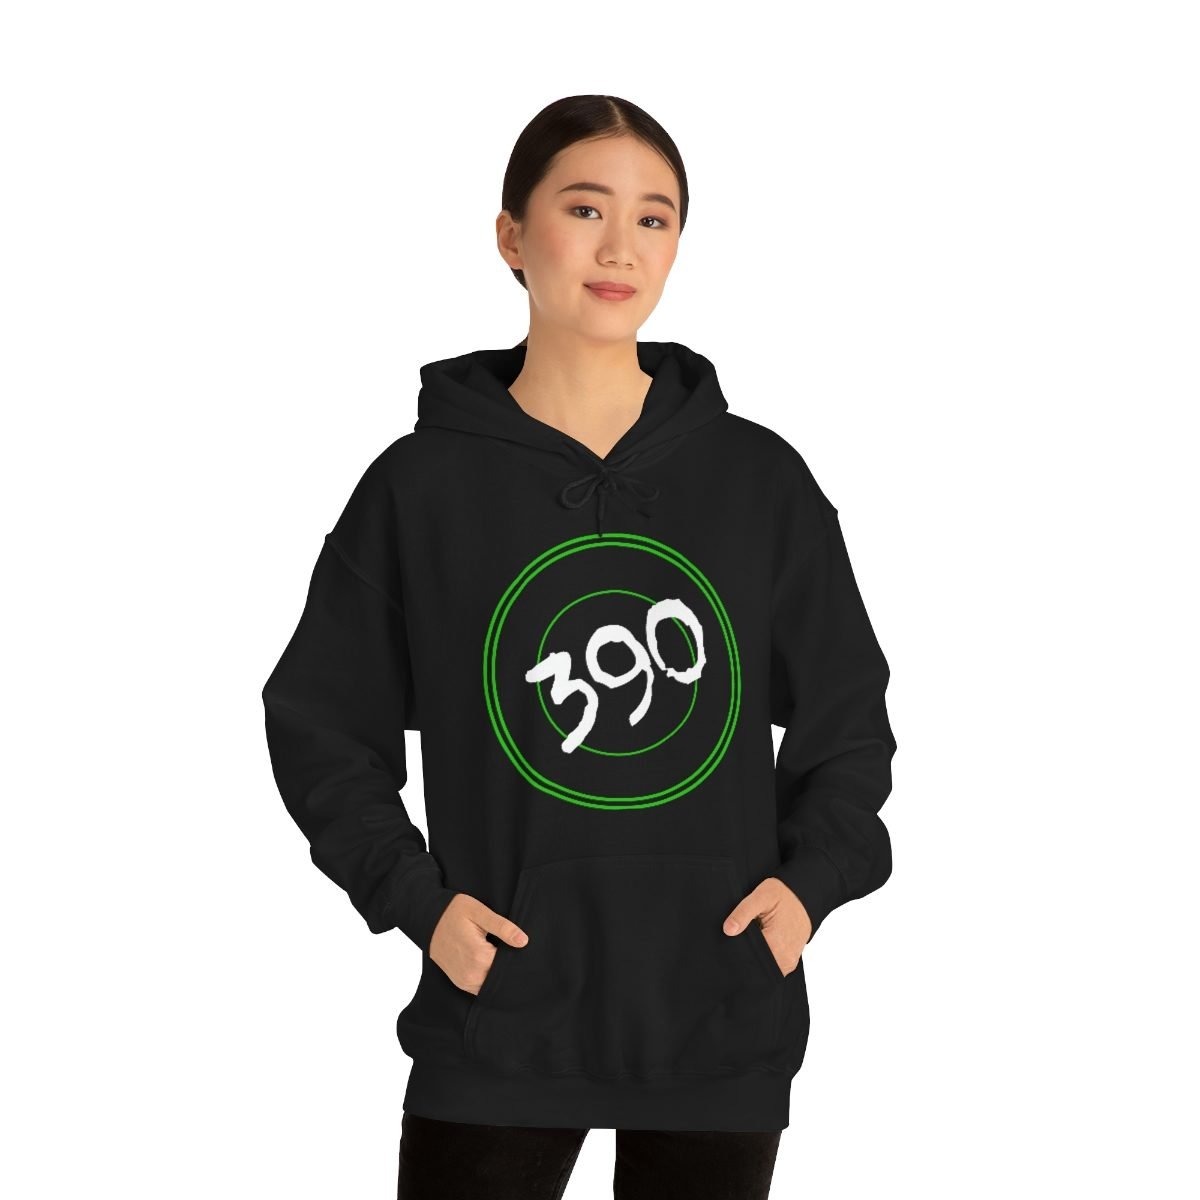 390 Logo Pullover Hooded Sweatshirt